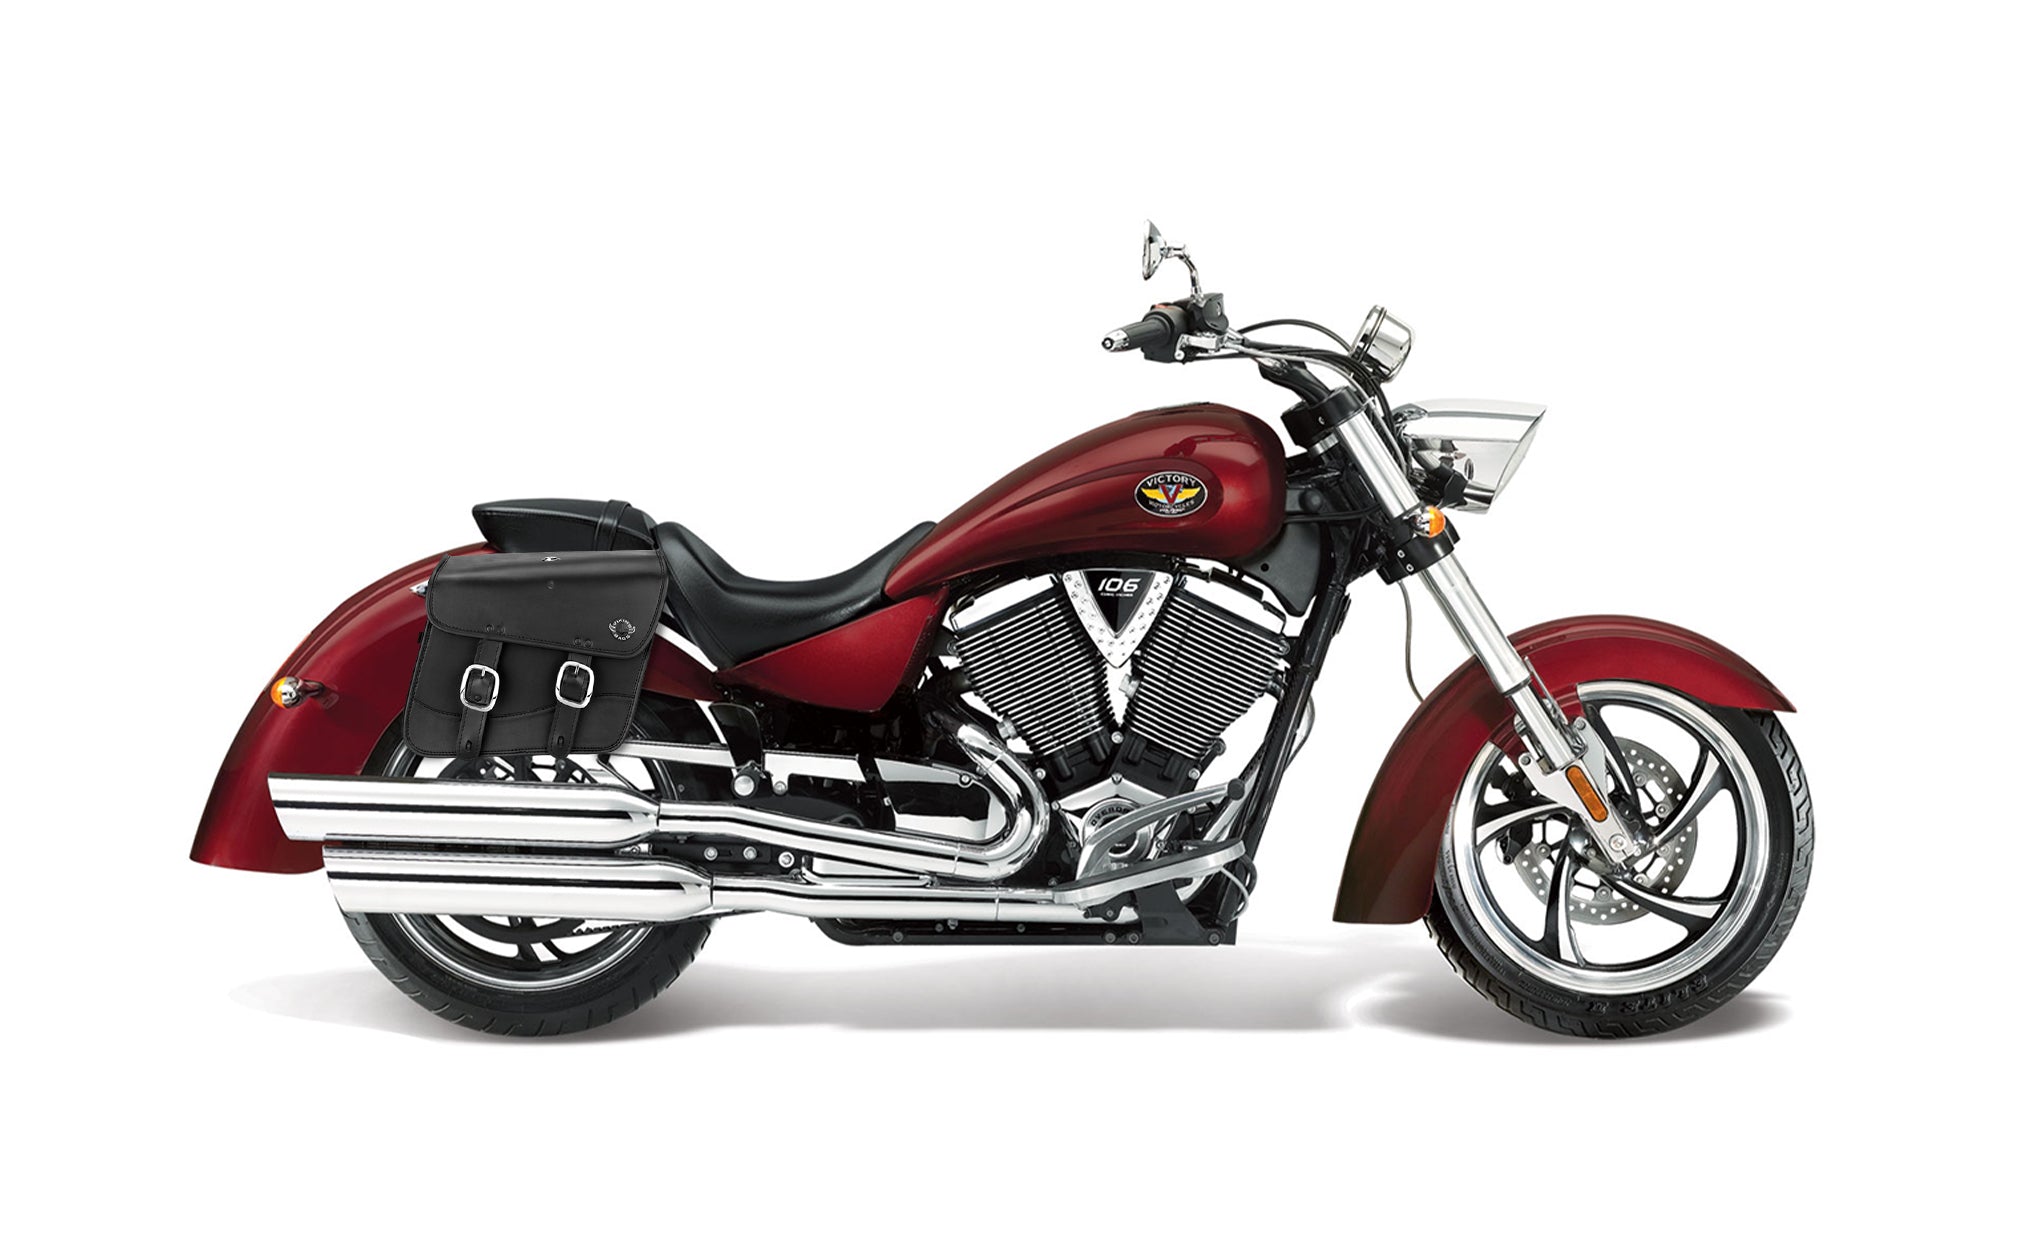 20L - Thor Medium Victory Kingpin Leather Motorcycle Saddlebags on Bike Photo @expand